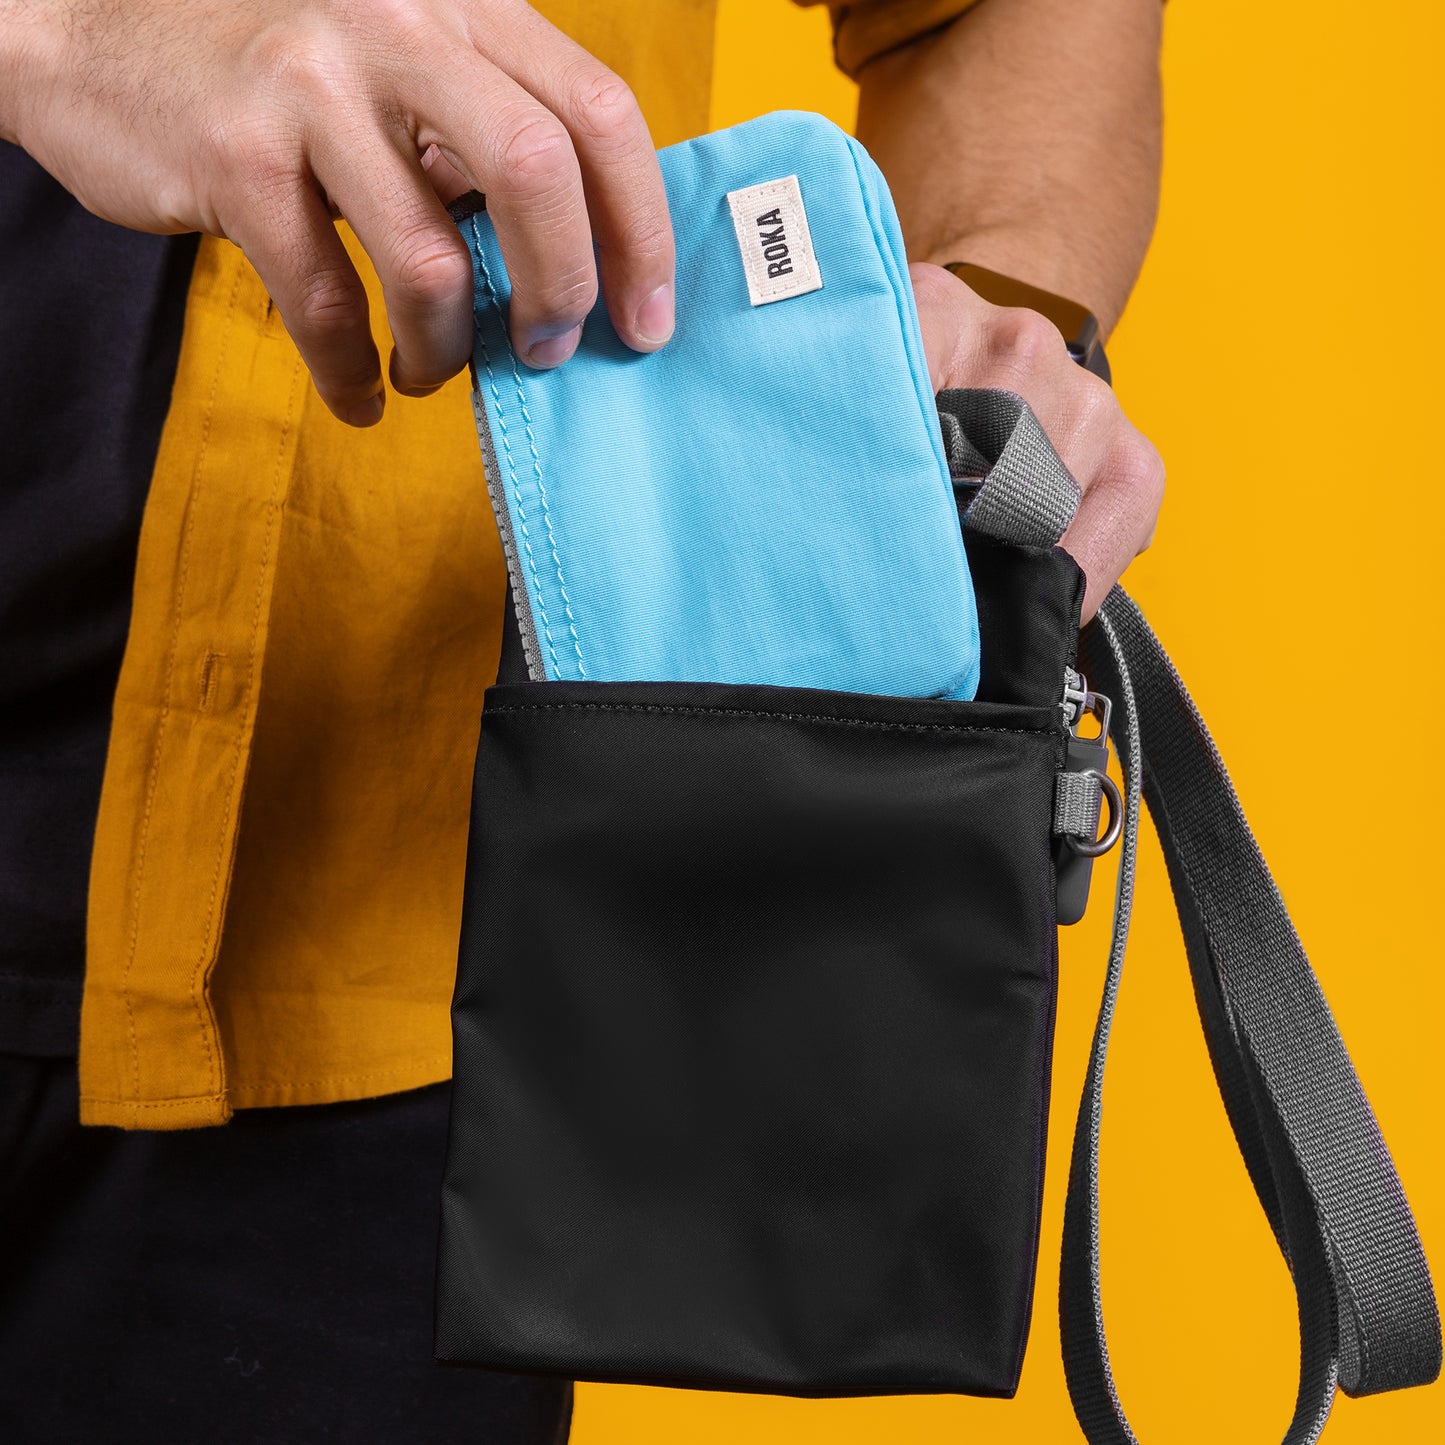 Roka London Chelsea Crossbody Phone Bag, Black (Recycled Nylon)